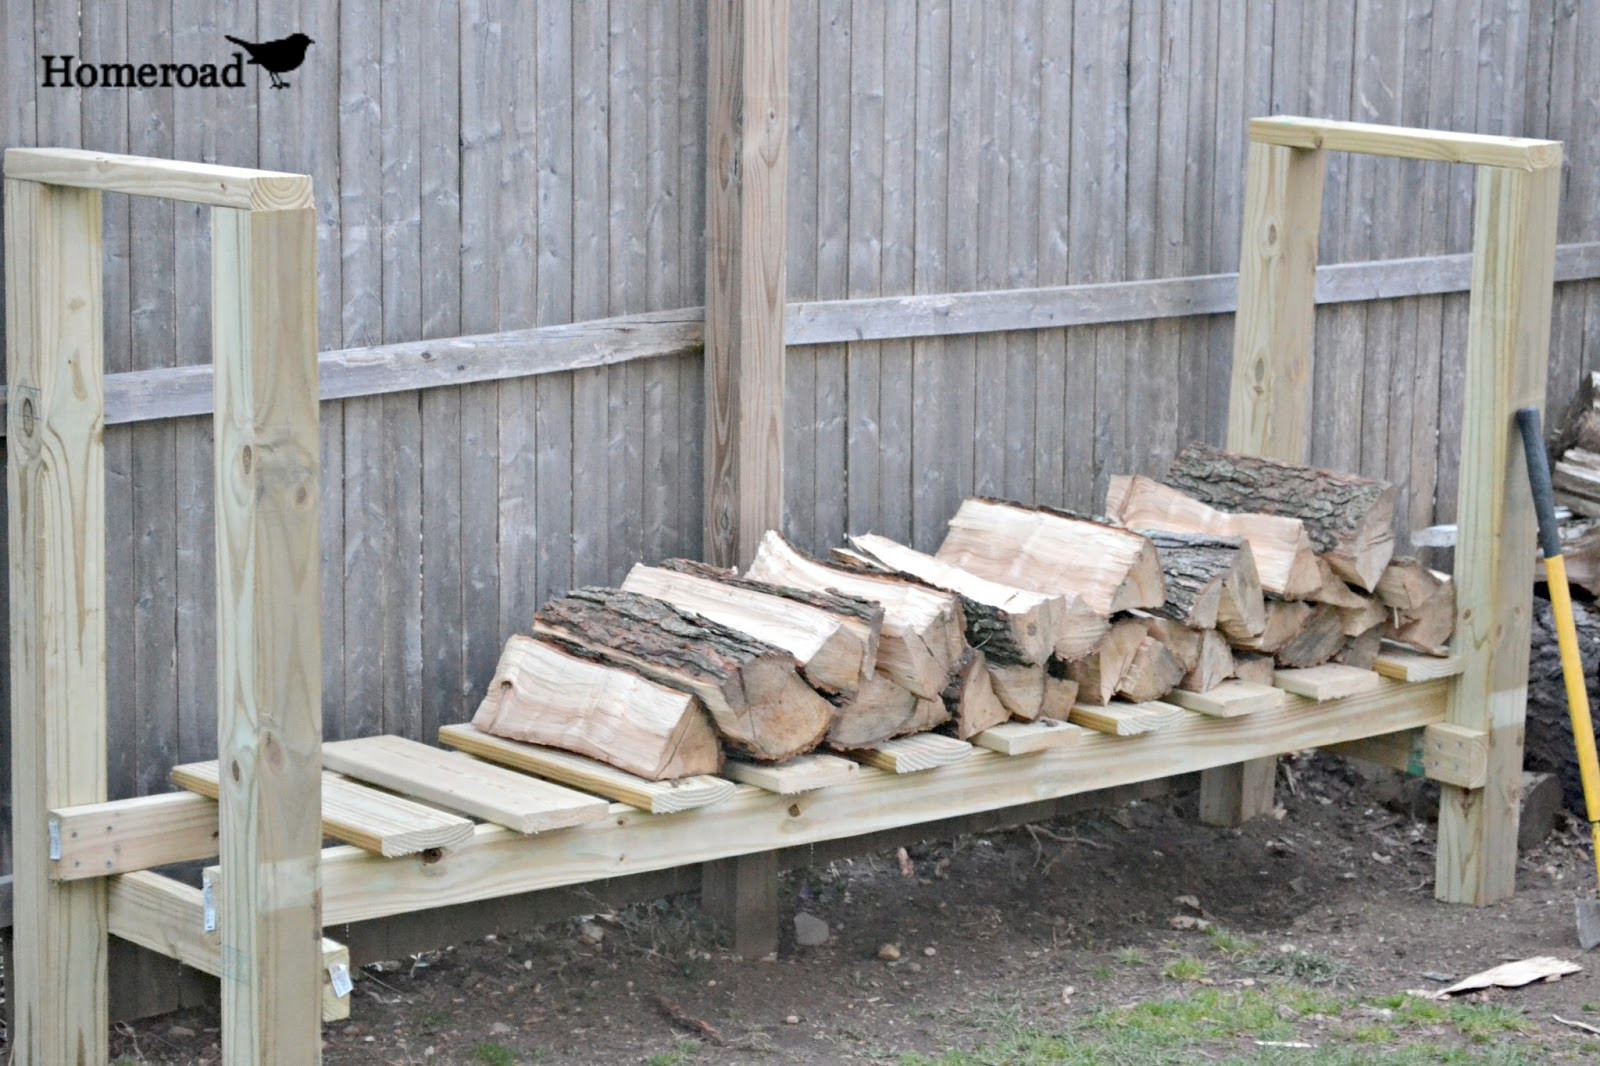 Best ideas about DIY Log Rack
. Save or Pin DIY Log Holder Now.